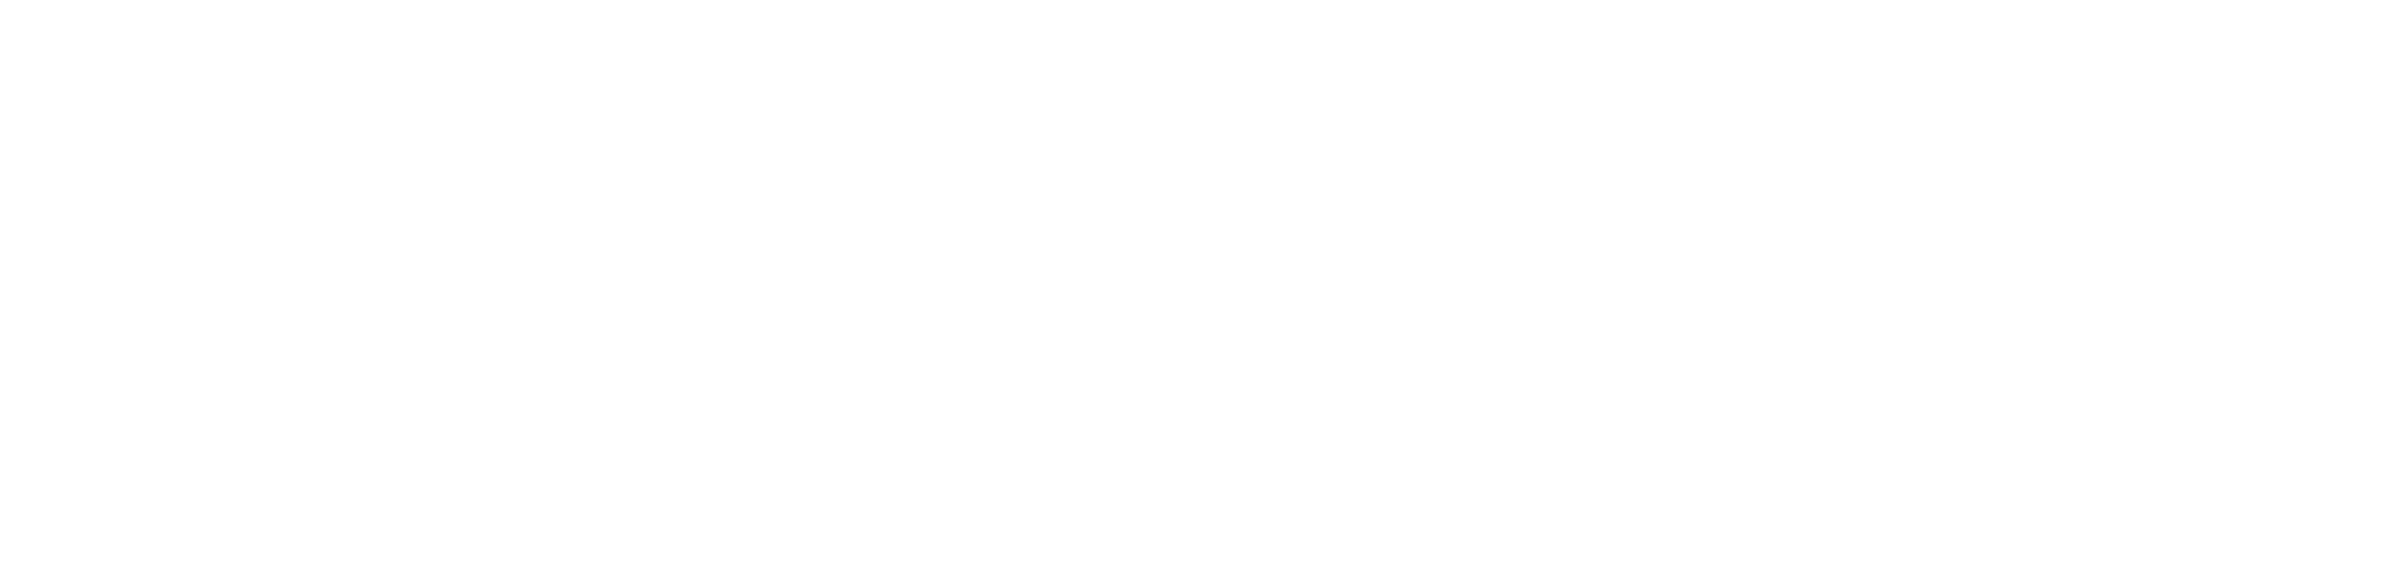 RainMaker Membership Systems & Software